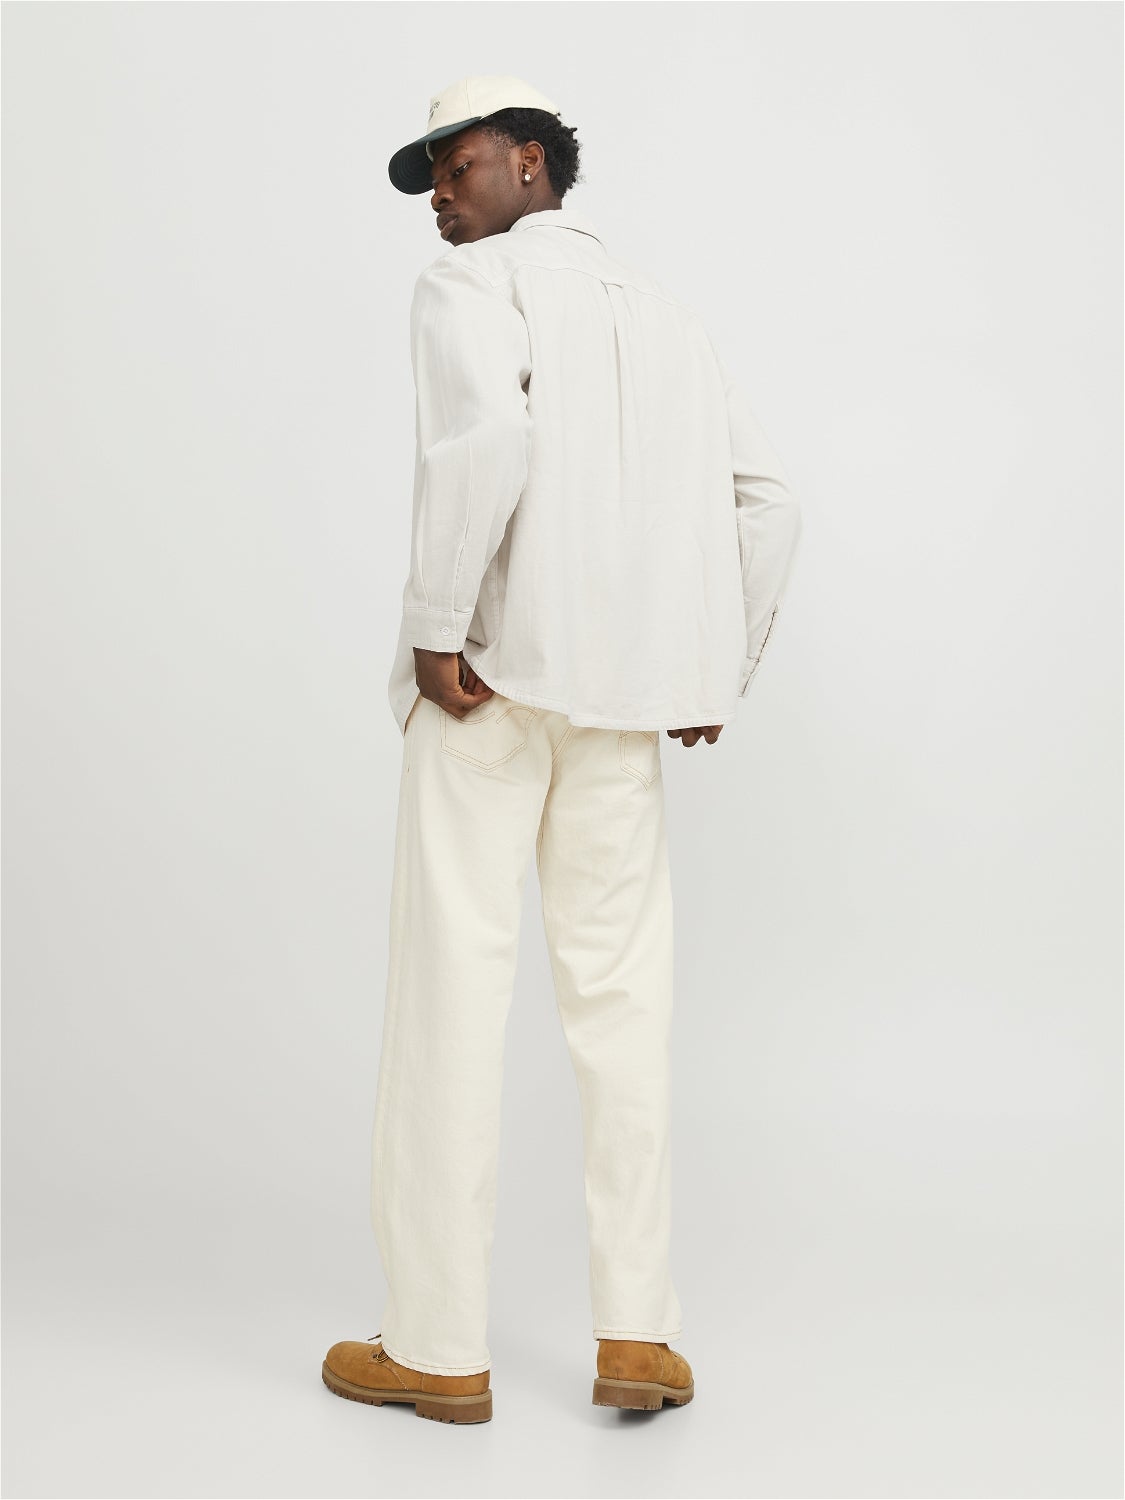 Levi's Off White (cream) Denim Shirt Jacket Women's Button Coat Size Small  for sale online | eBay